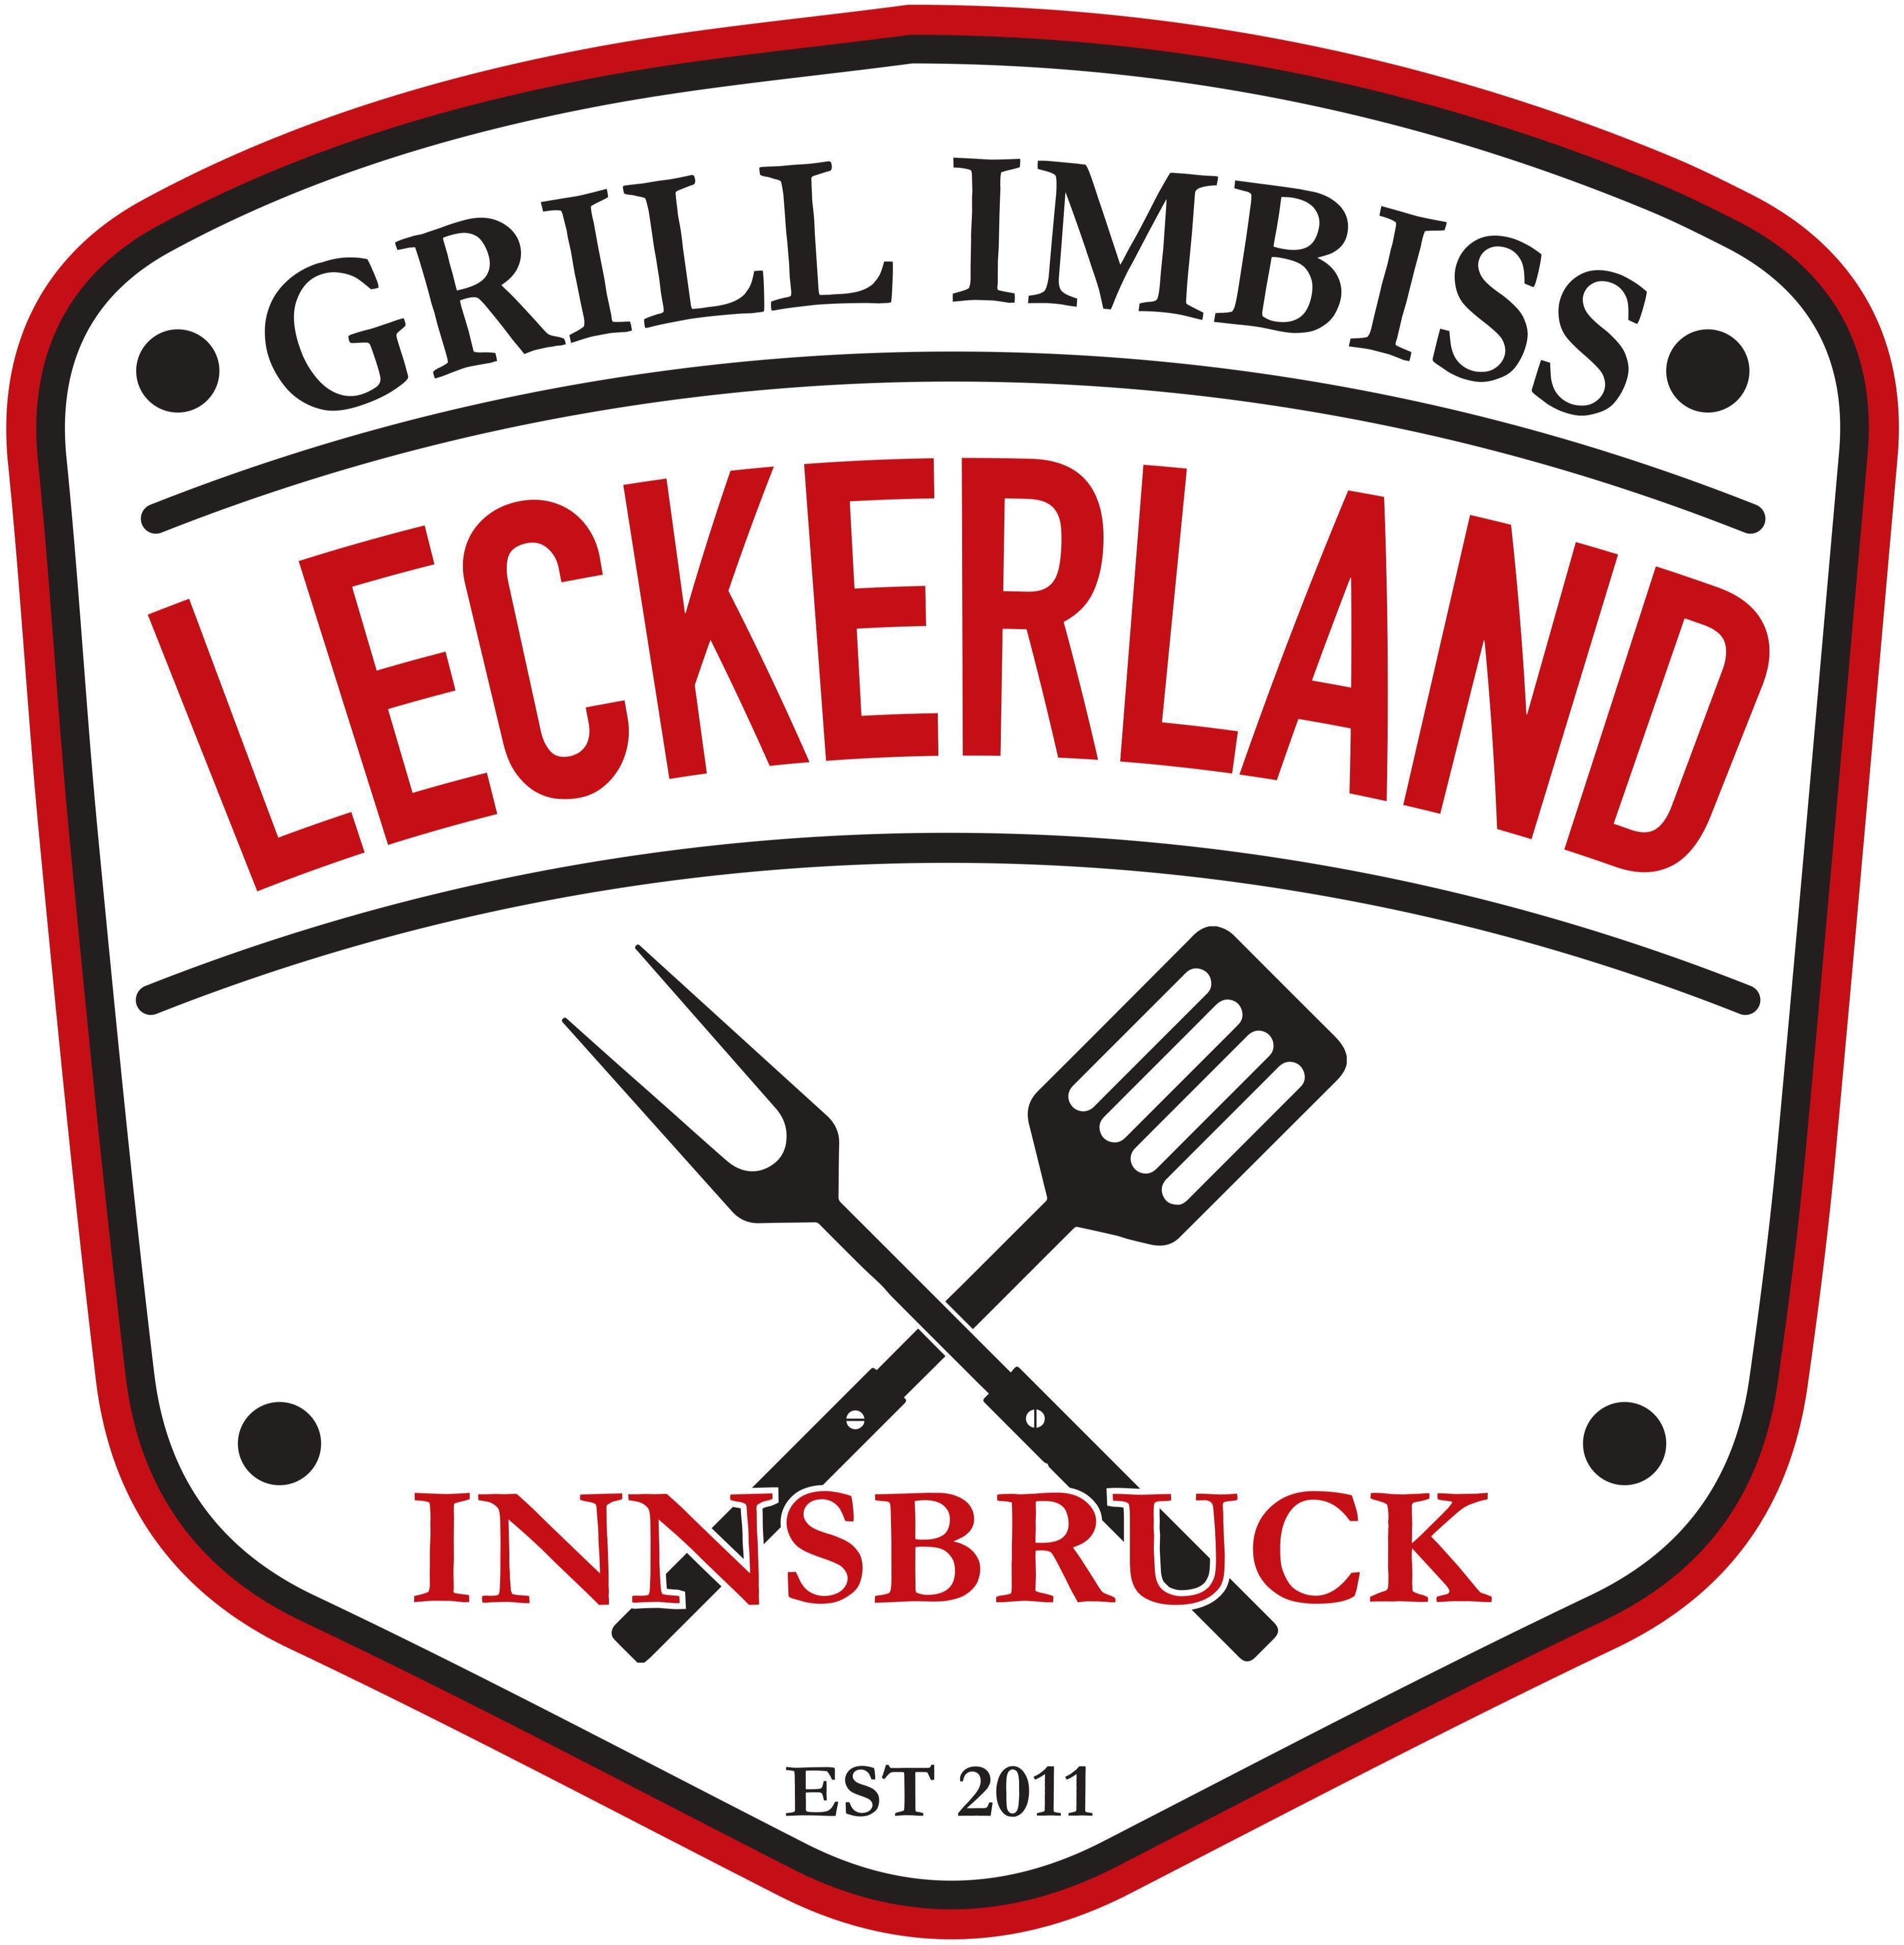 Logo Grill-Imbiss Leckerland